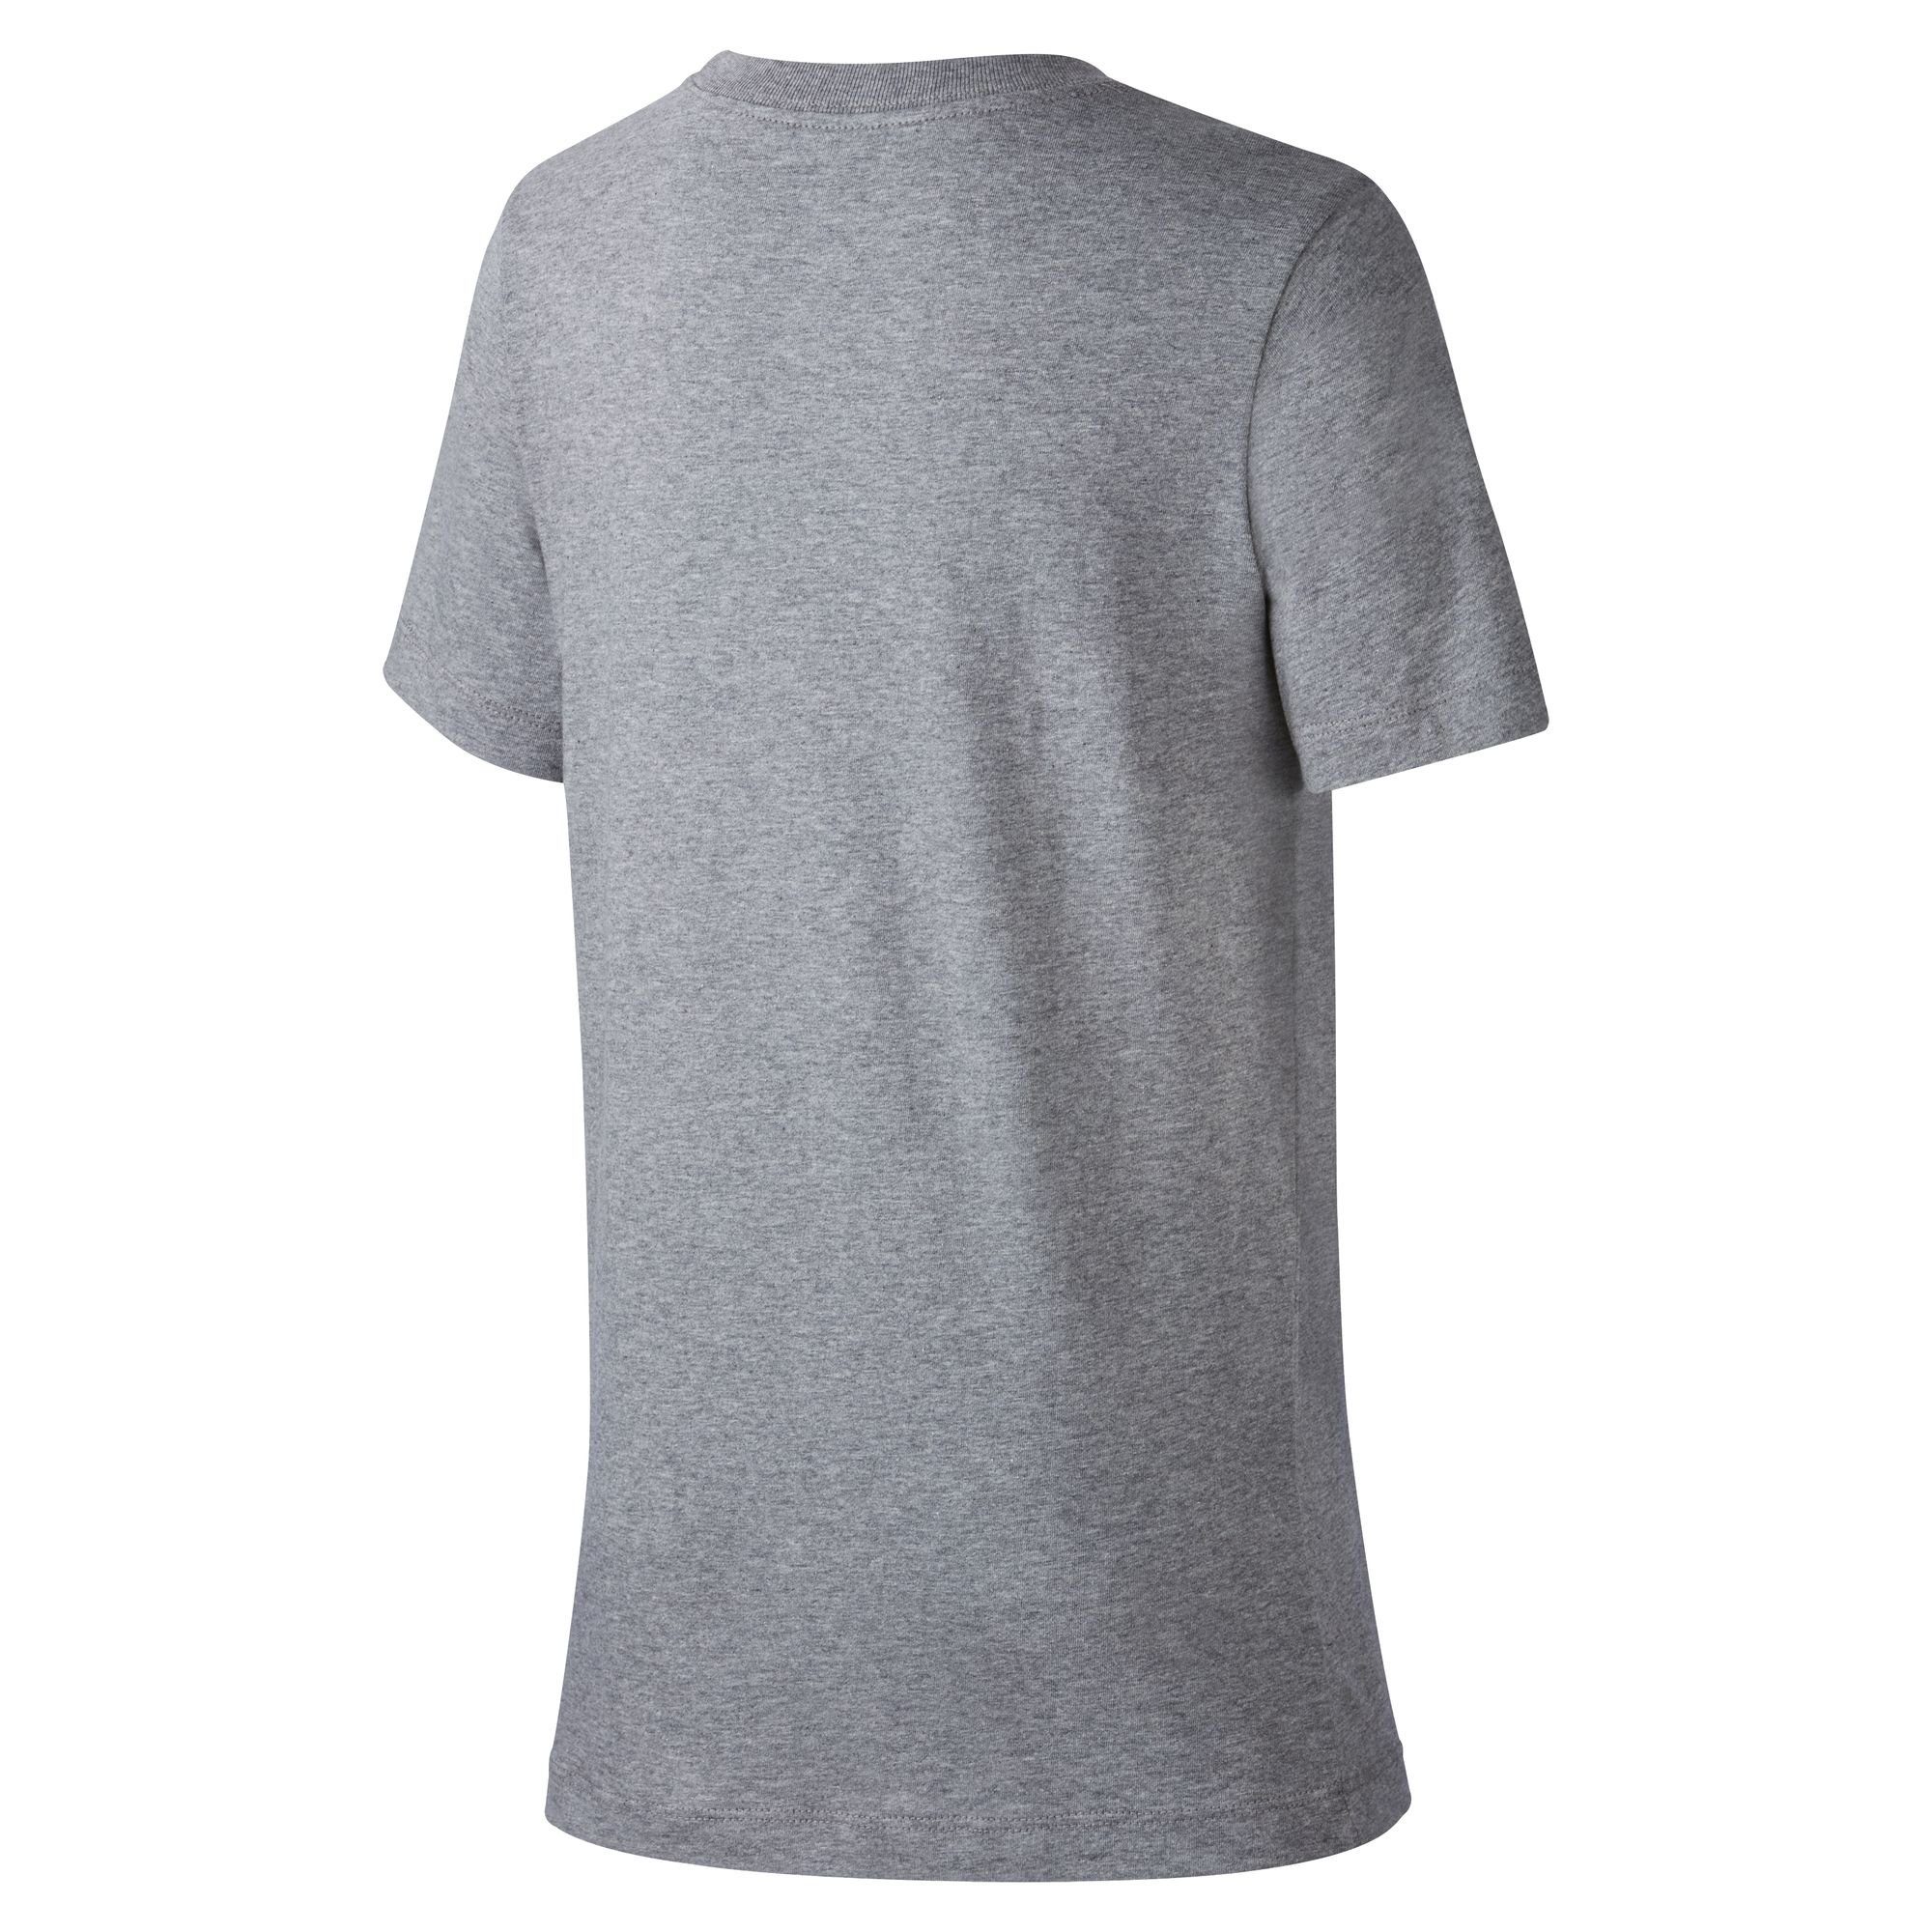 grau-meliert T-SHIRT T-Shirt KIDS' COTTON Nike BIG Sportswear